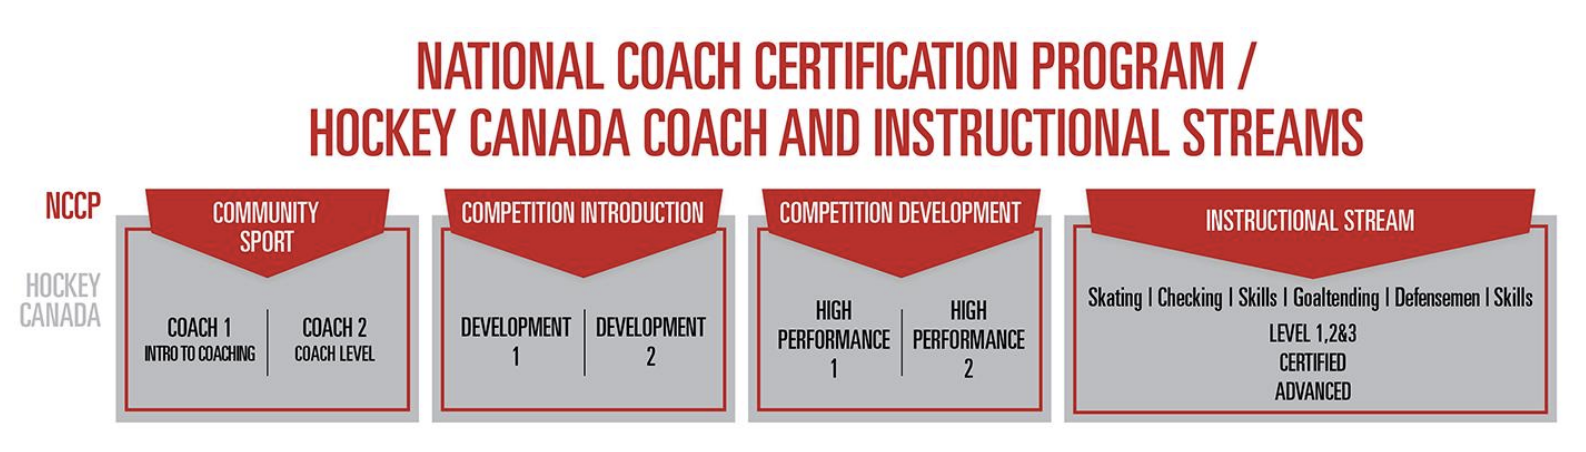 Hockey Canada National Coach Certification Program